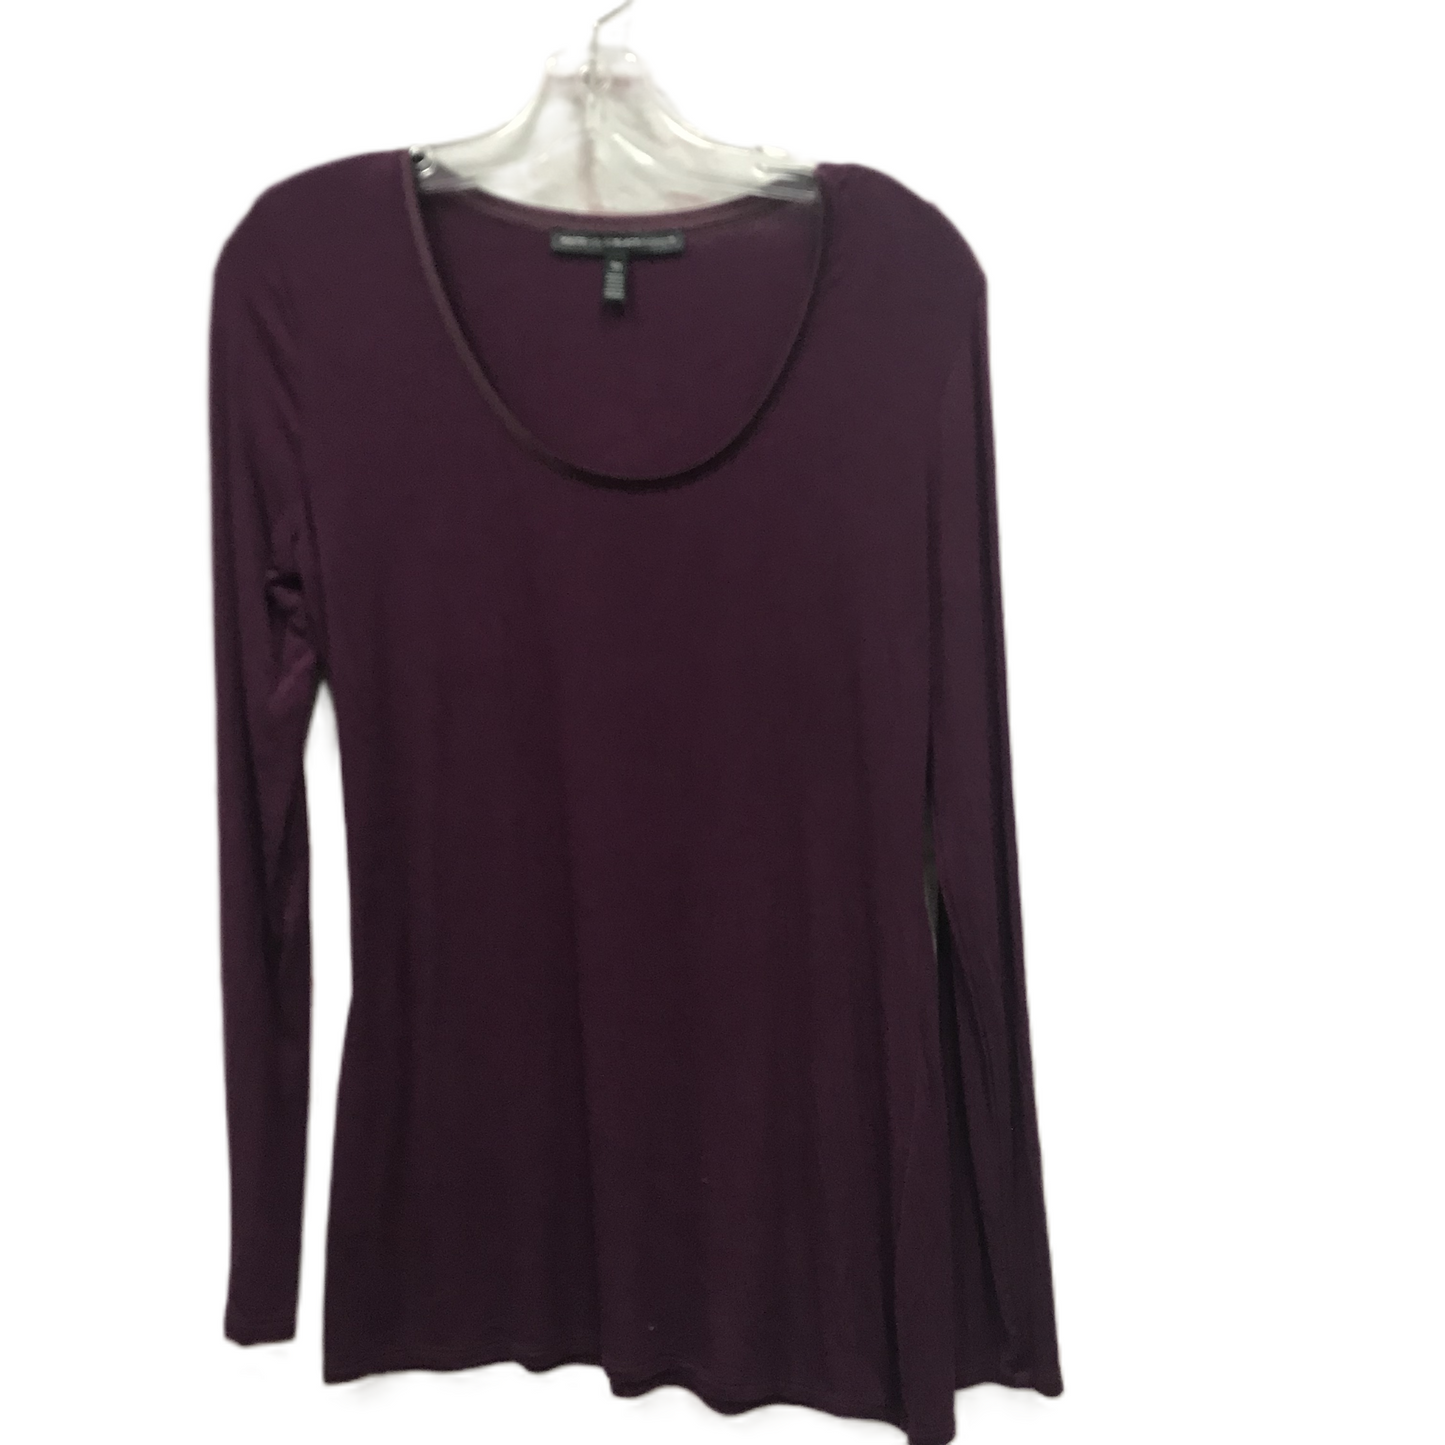 Purple Top Long Sleeve Basic By White House Black Market, Size: Xs